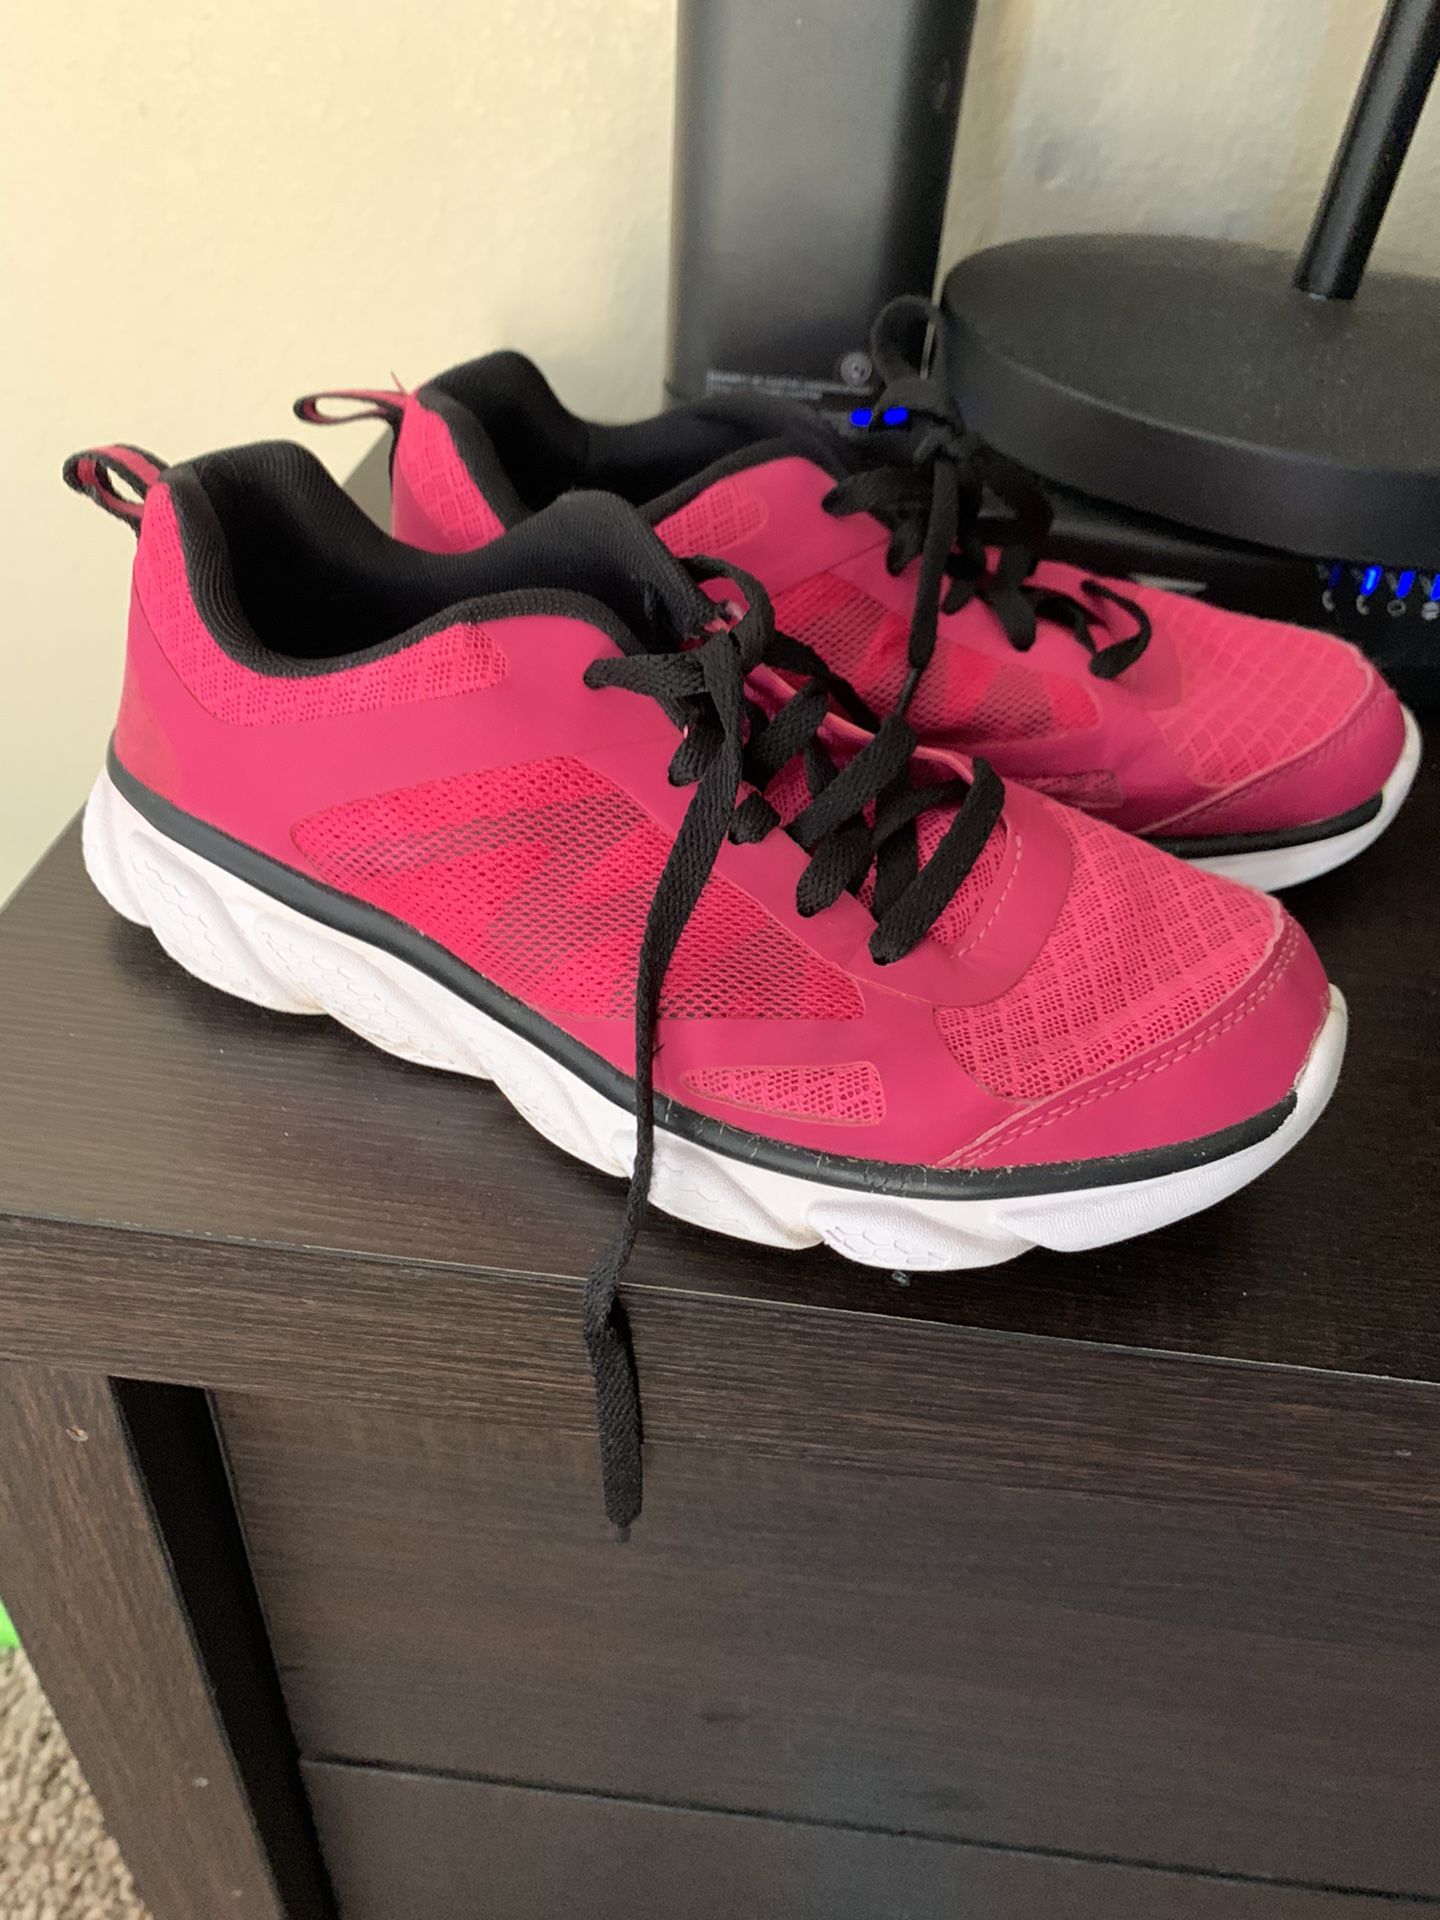 Hot pink sneakers